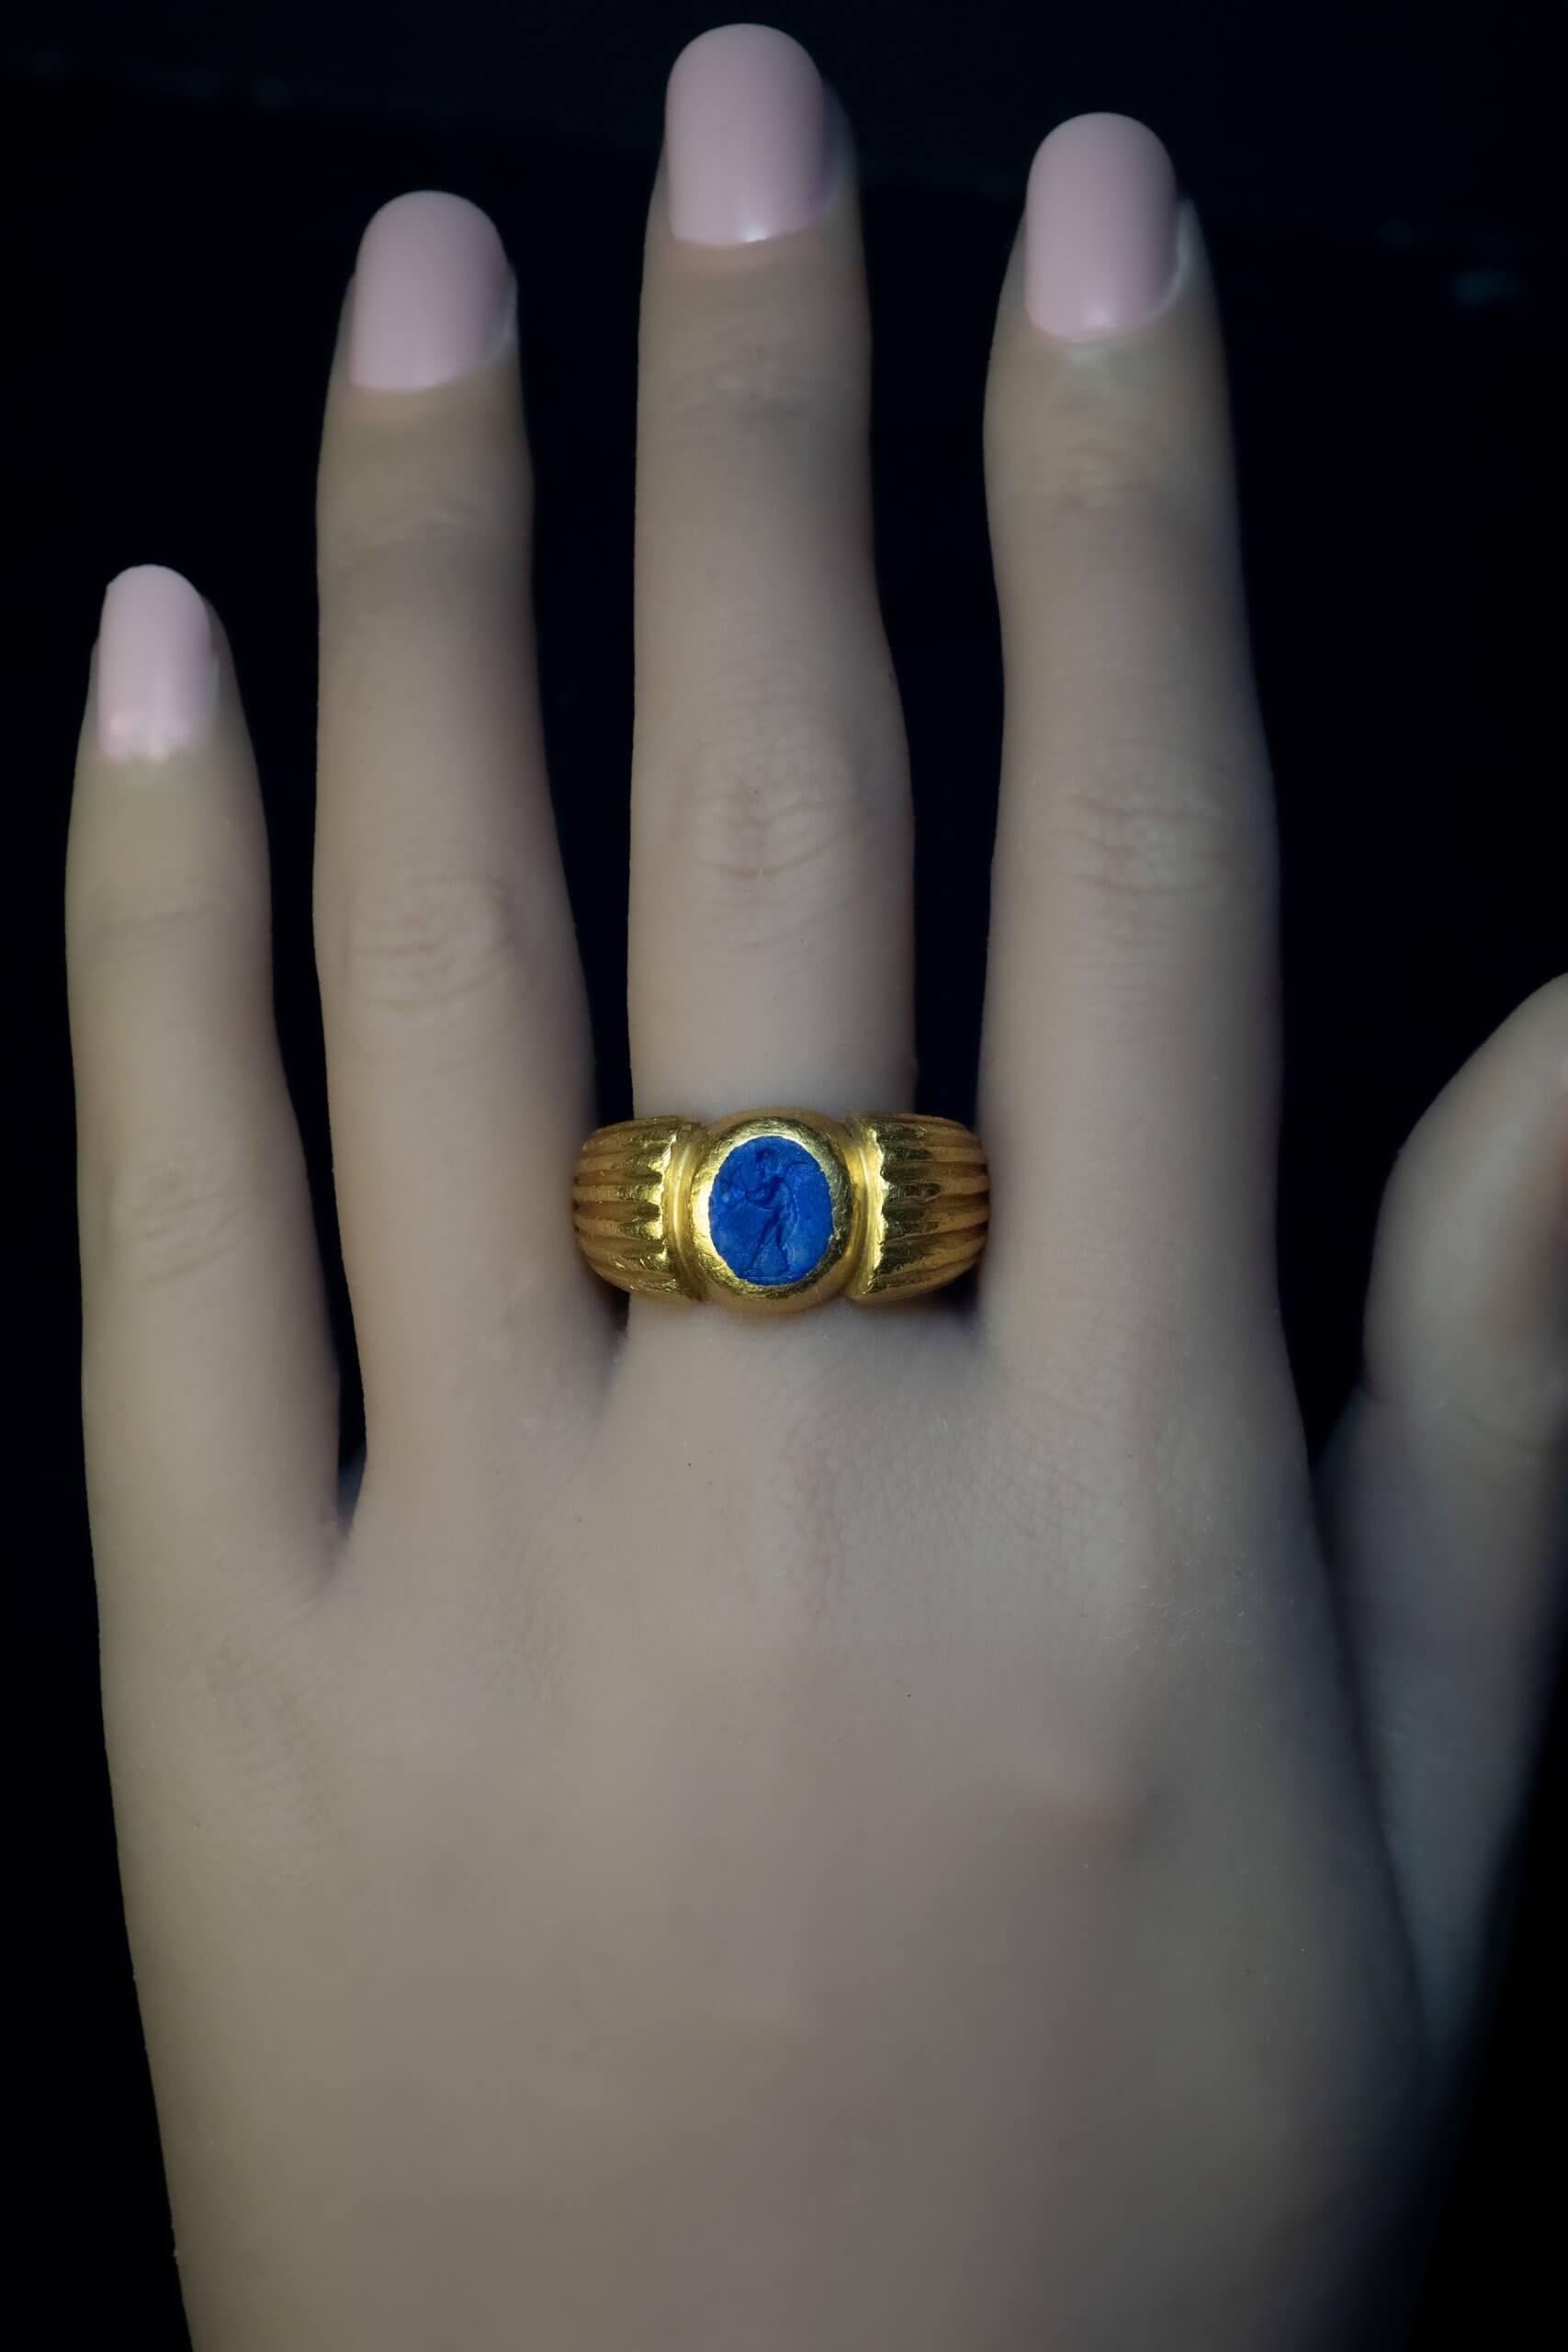 Classical Roman Ancient Roman Lapis Lazuli Intaglio Gold Ring c.2nd Century AD For Sale